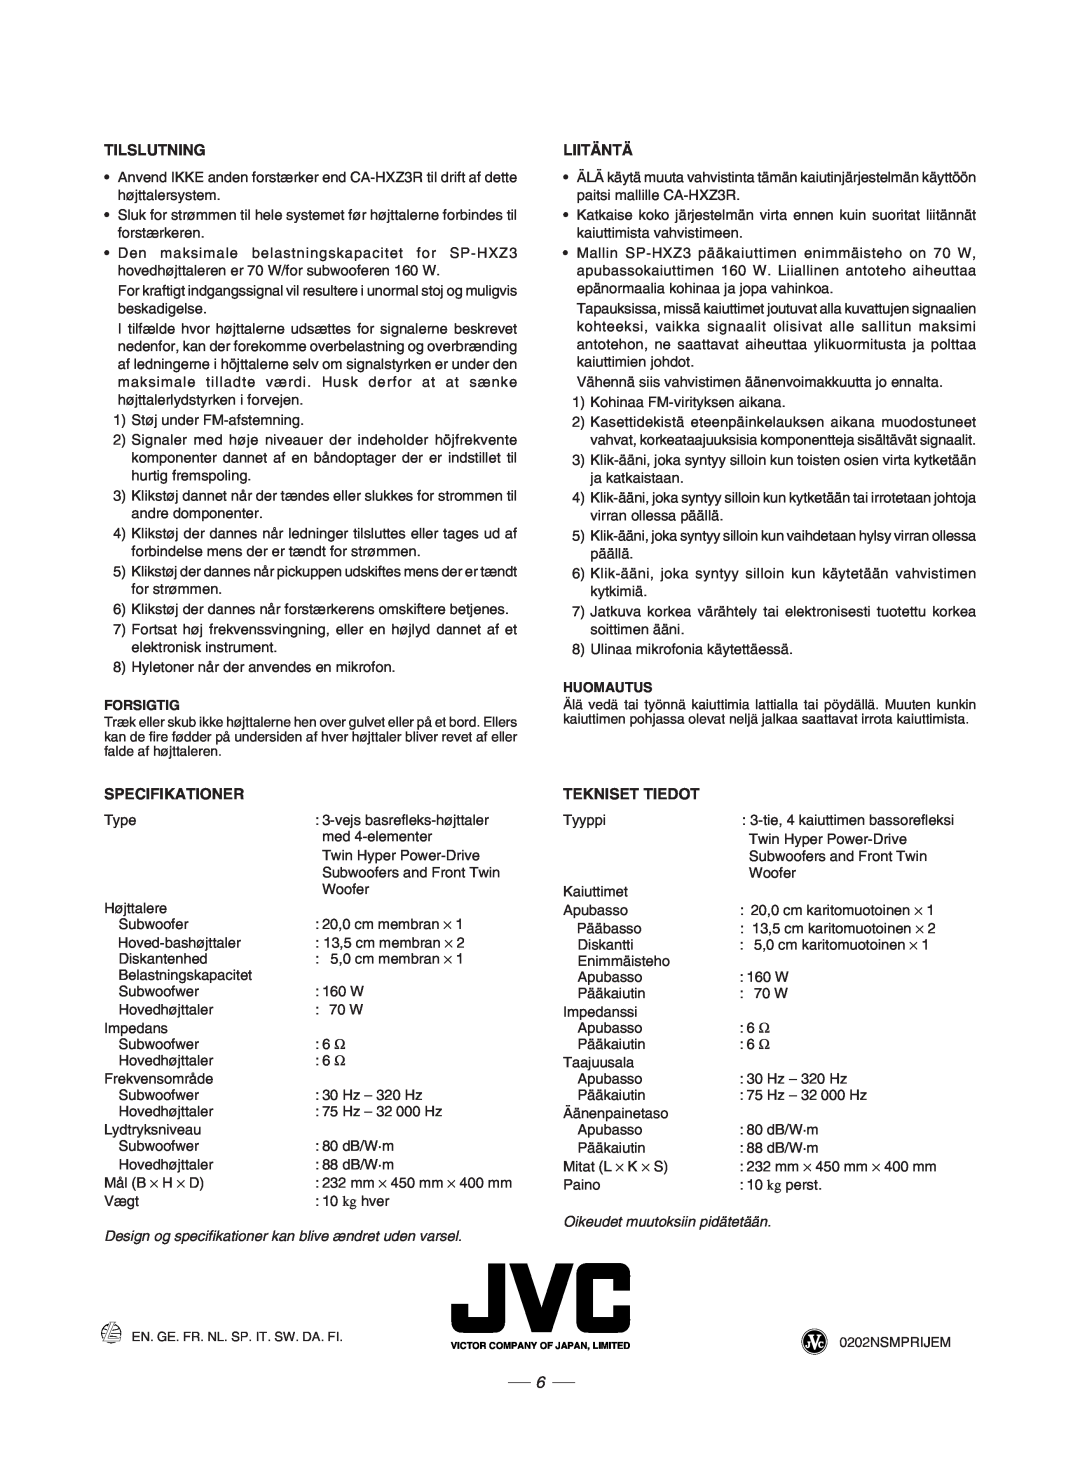 JVC CA-HXZ3R, GVT0086-008A manual Tilslutning, Liitäntä, Specifikationer, Tekniset Tiedot 